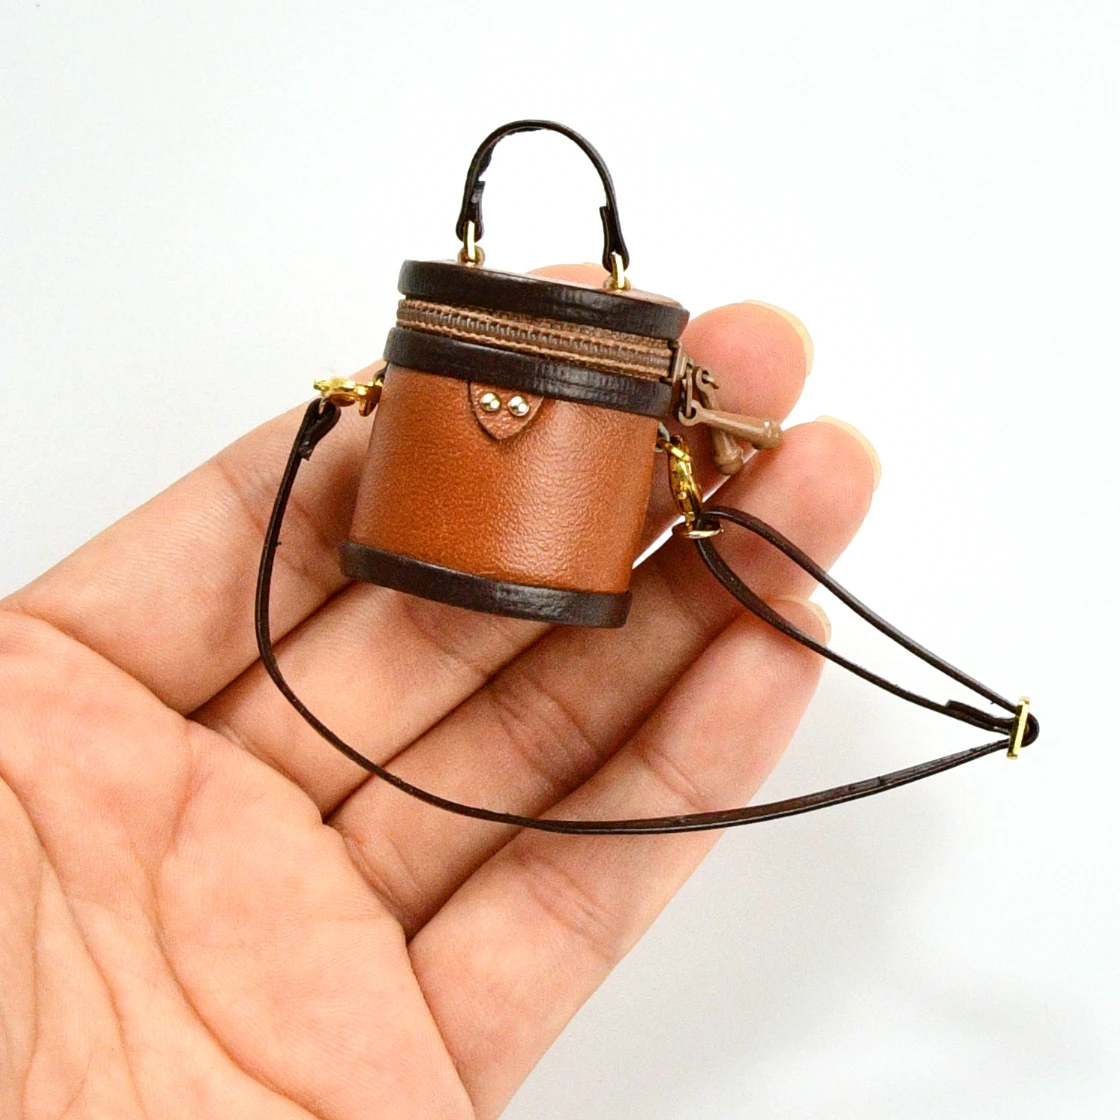 miniature chanel bag